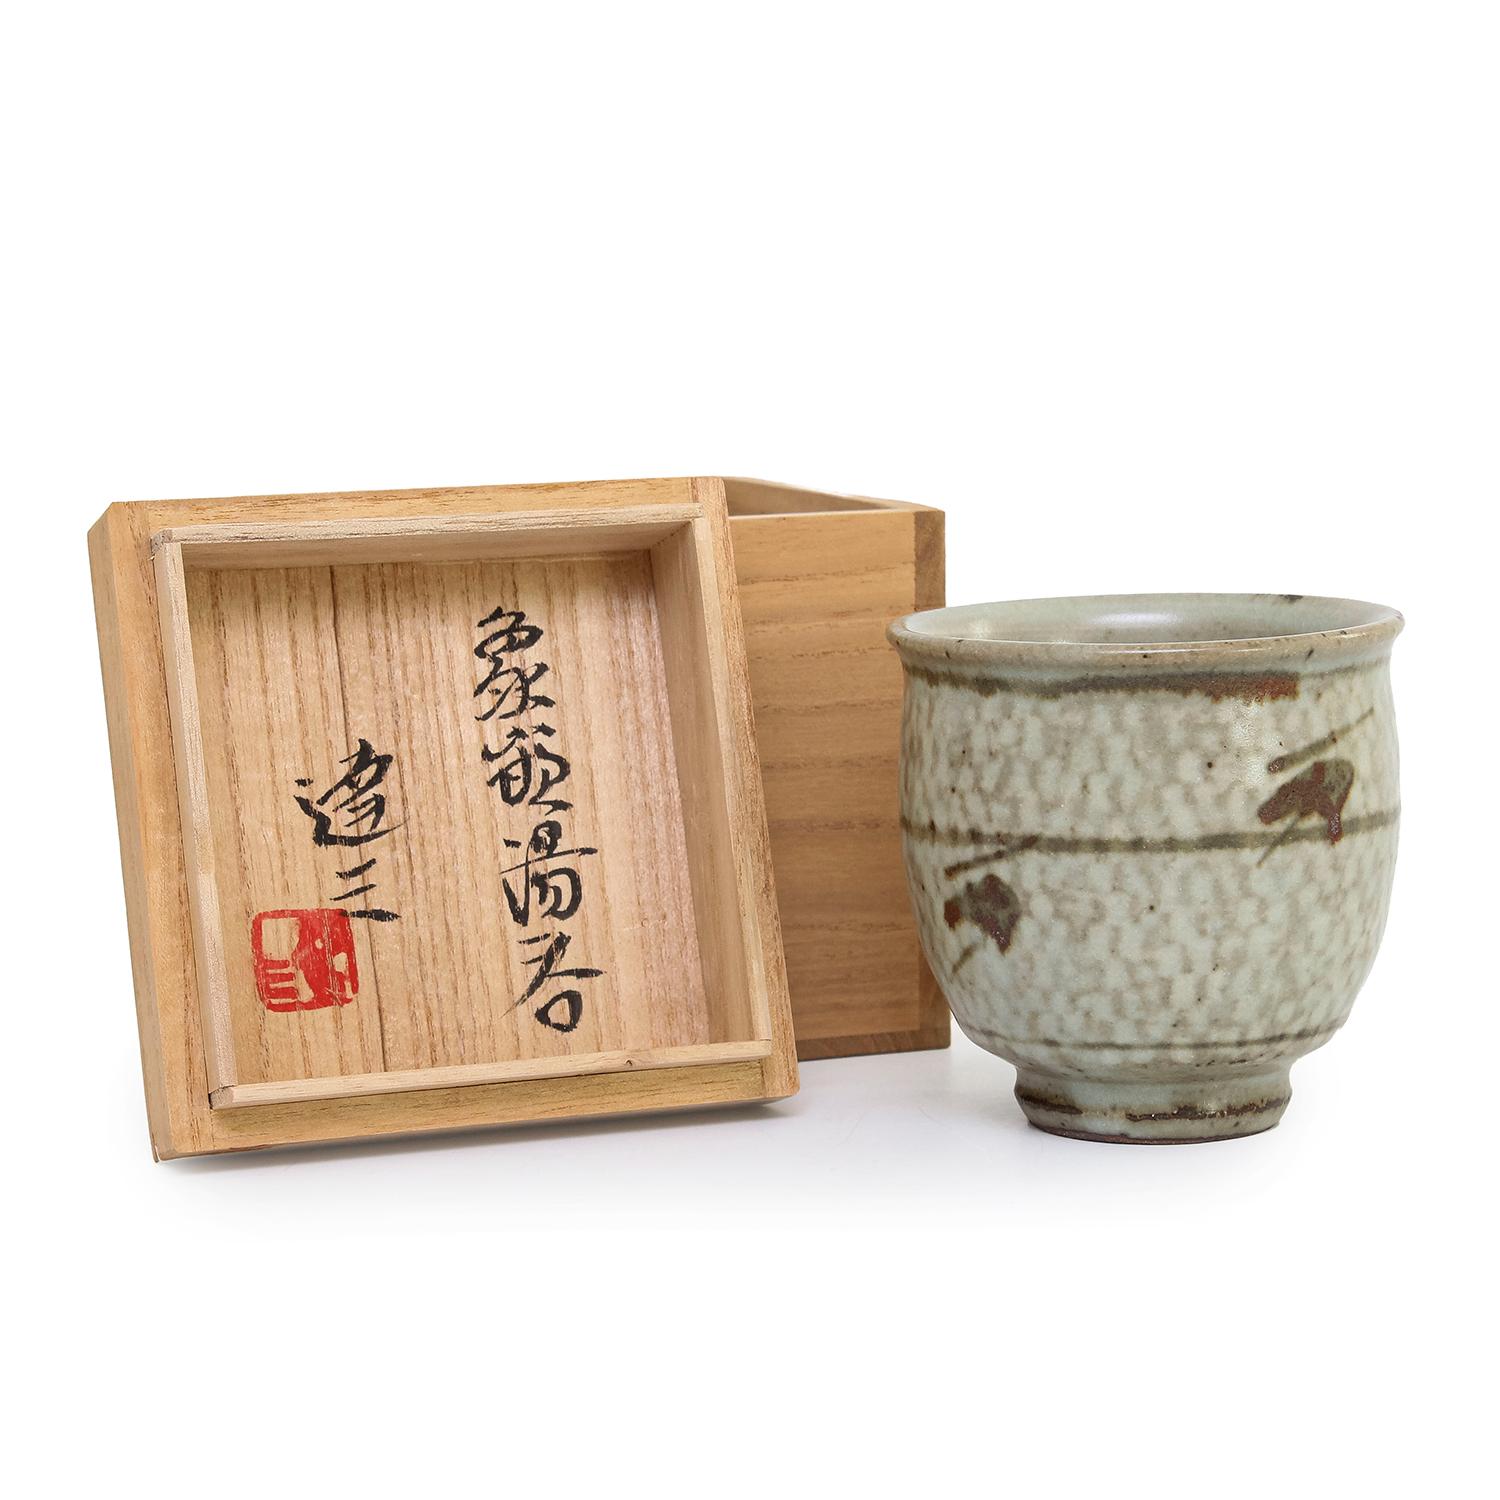 TATSUZO SHIMAOKA 
YUNOMI WITH BOX (INV# NP3196)
stoneware and glaze
3.5 x 3.5 x 3.5”
date unknown
signed